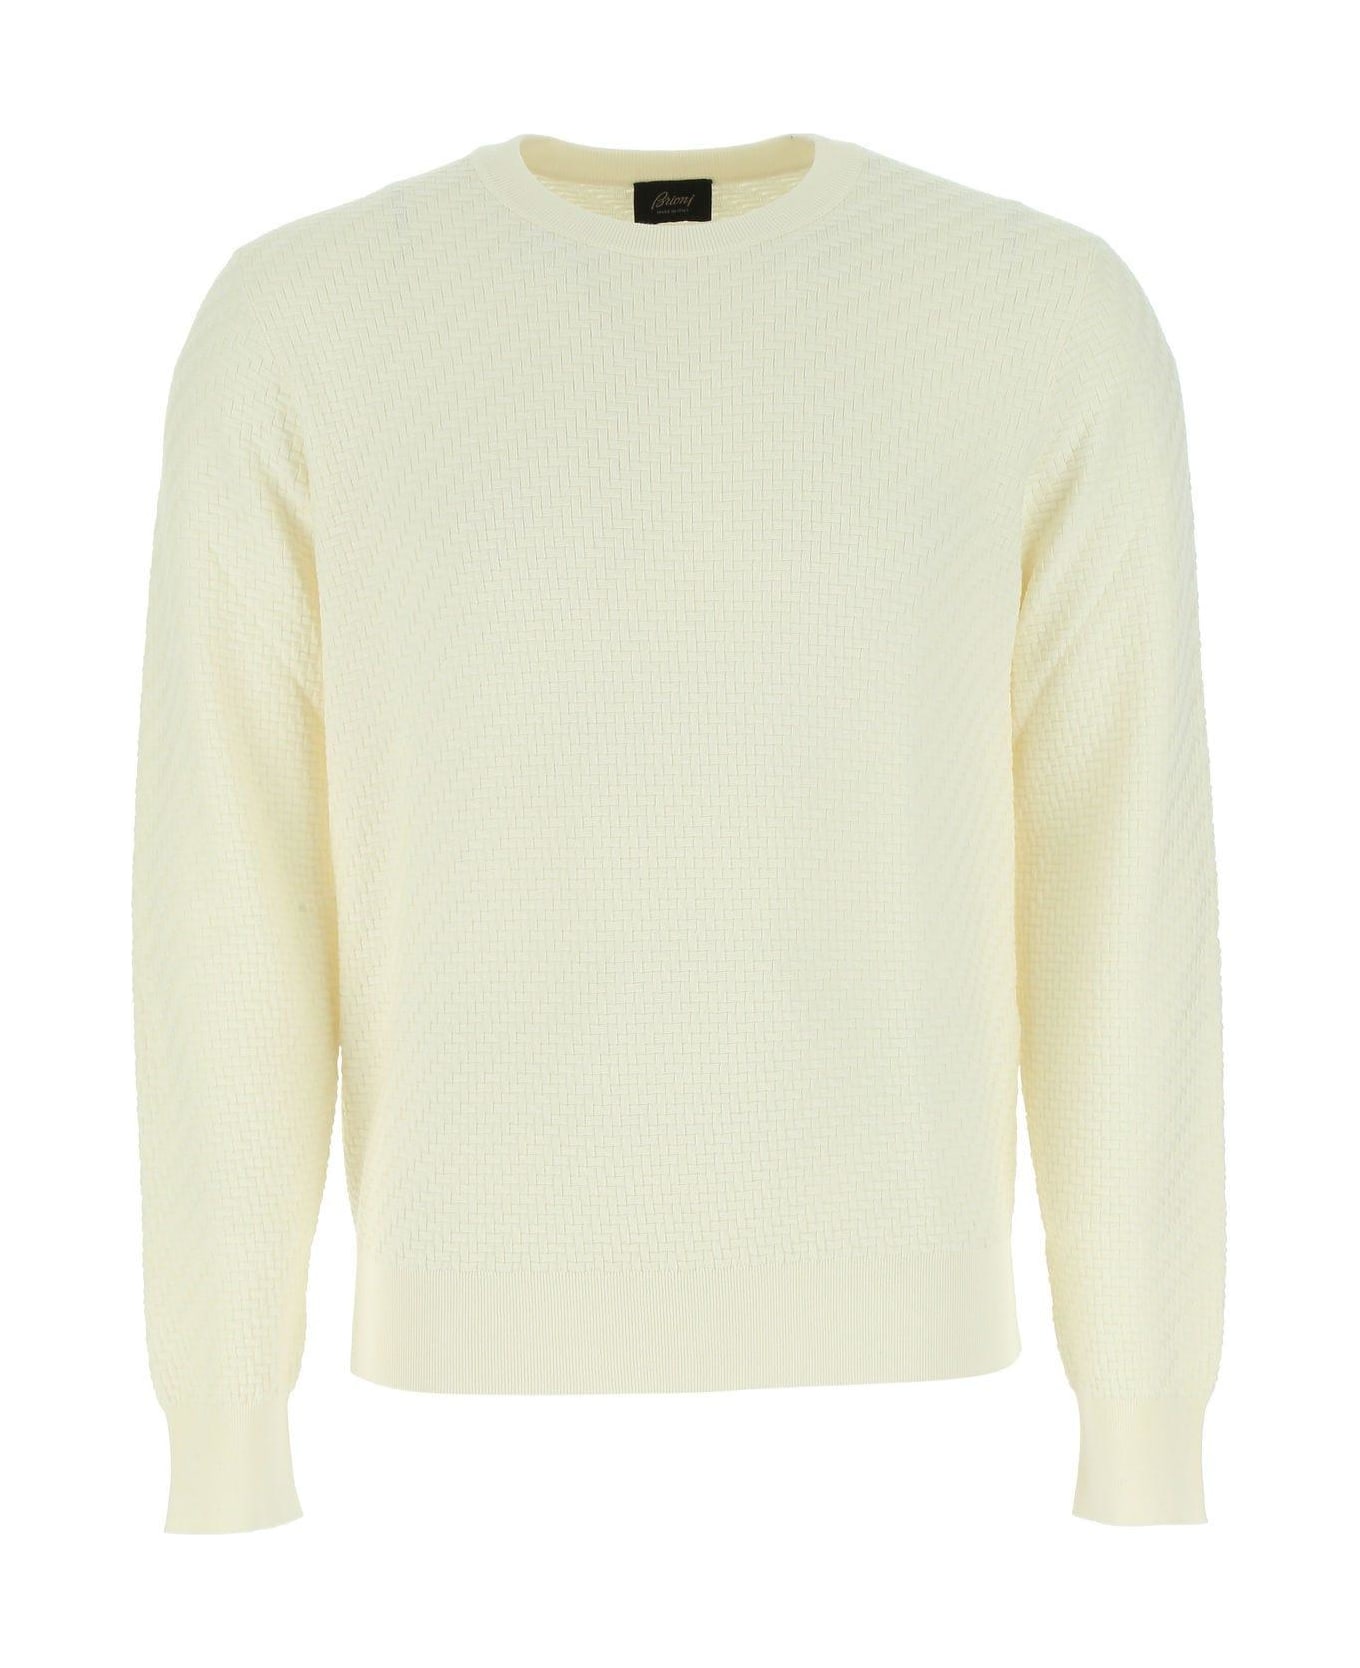 Brioni Ivory Cotton Blend Sweater - NEUTRALS